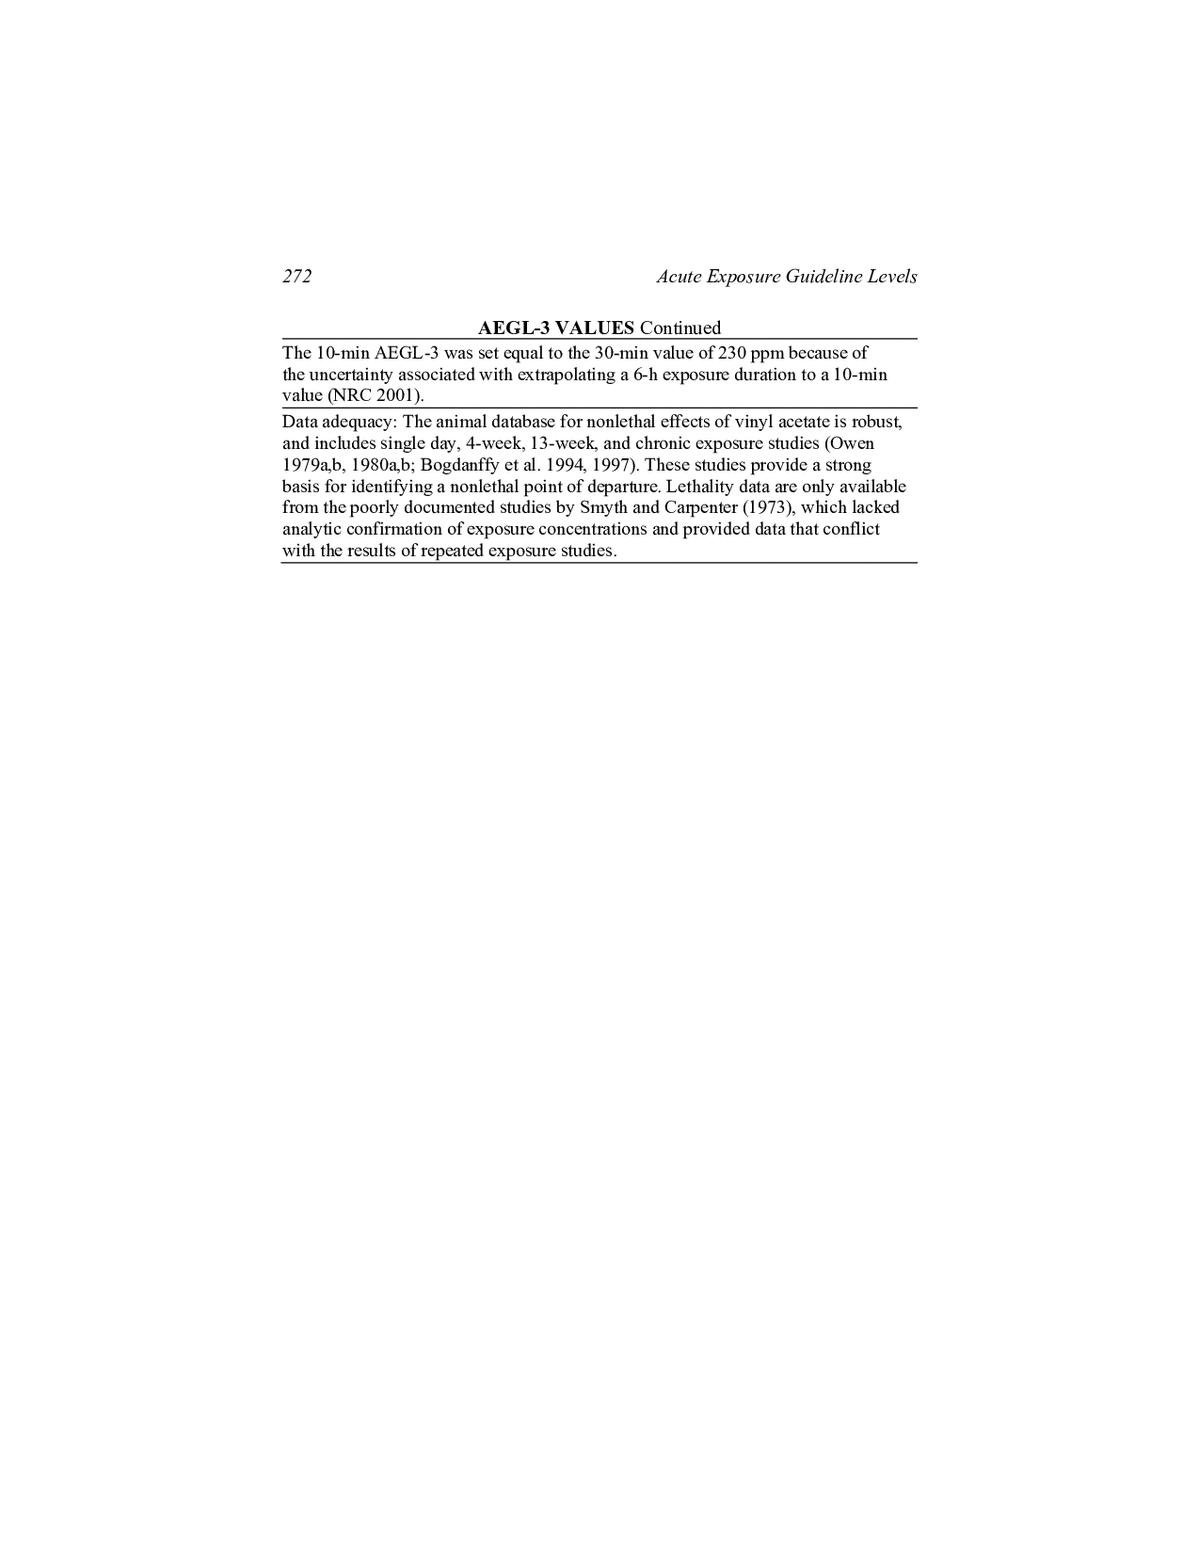 pdf goodman and gilman manual of pharmacology